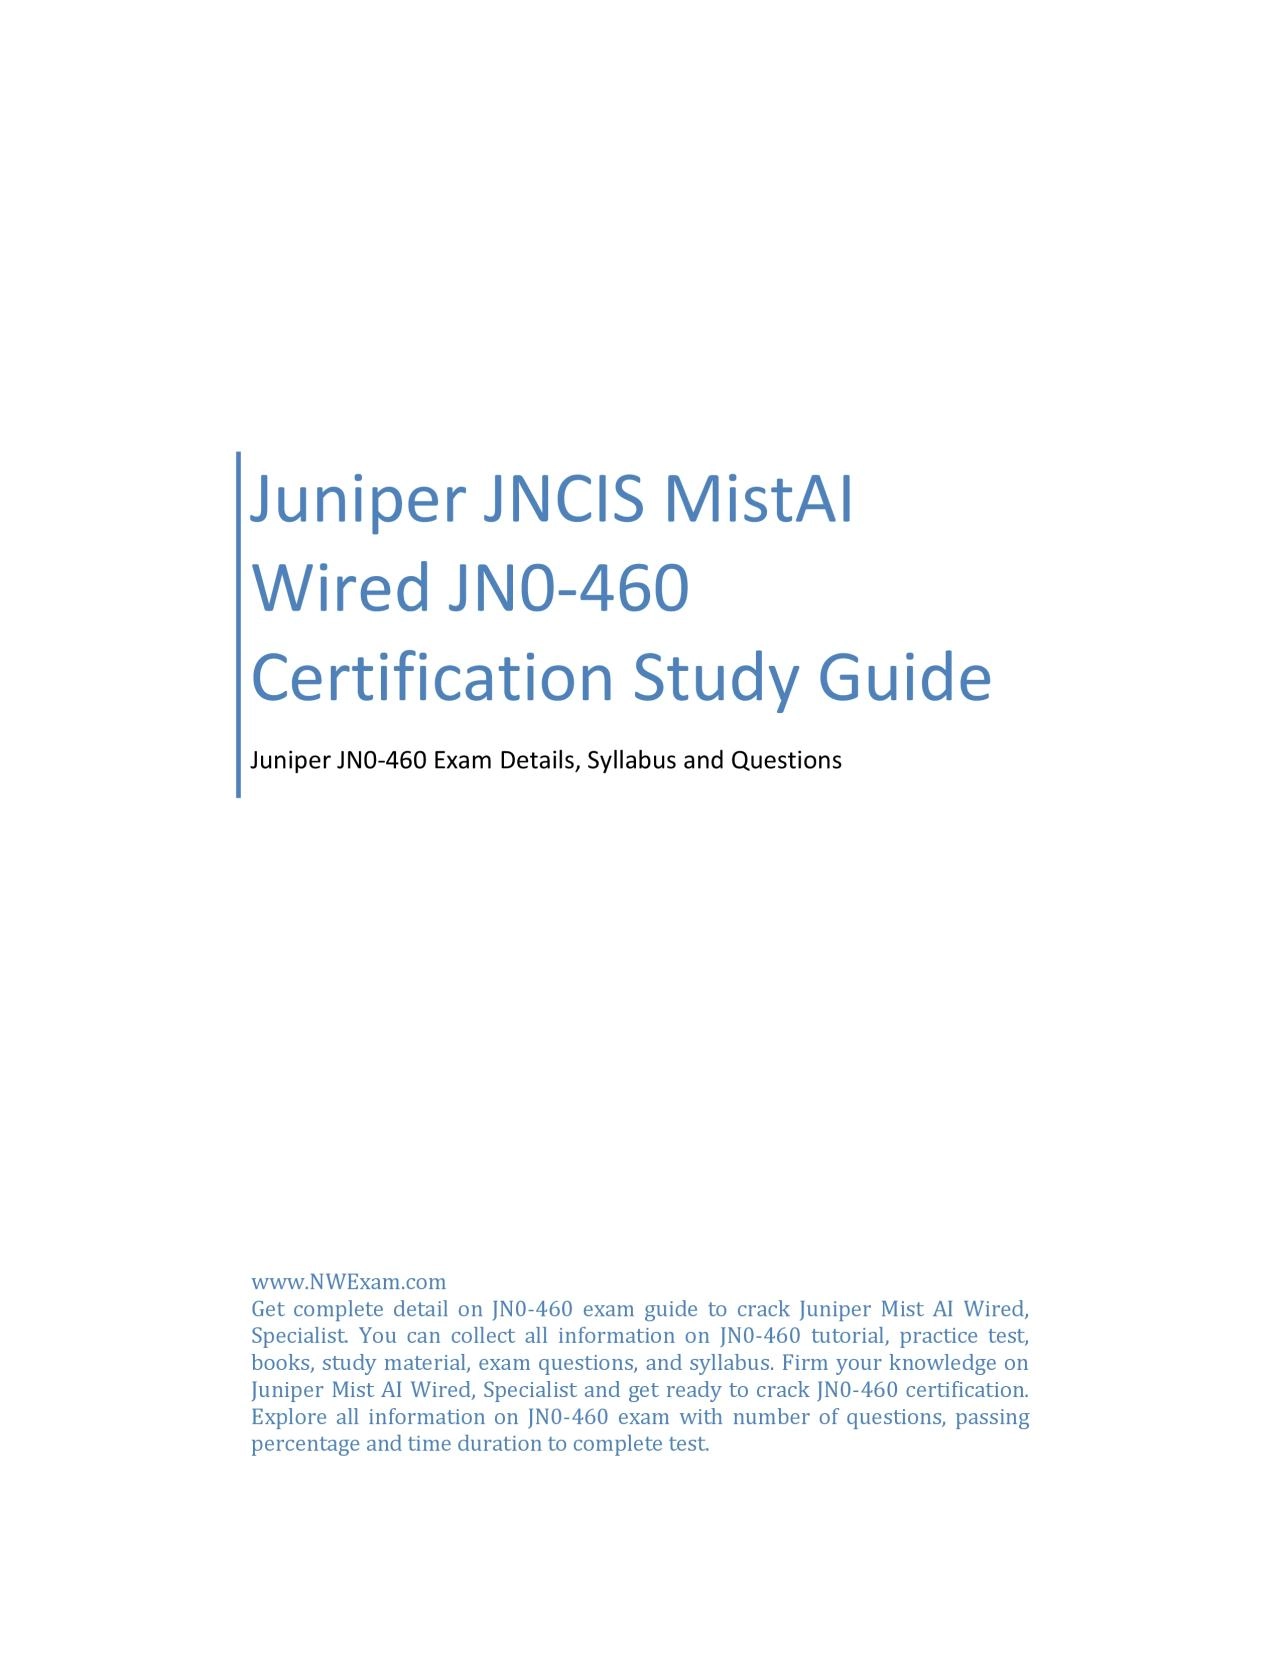 Juniper JNCIS MistAI Wired JN0-460 Certification Study Guide